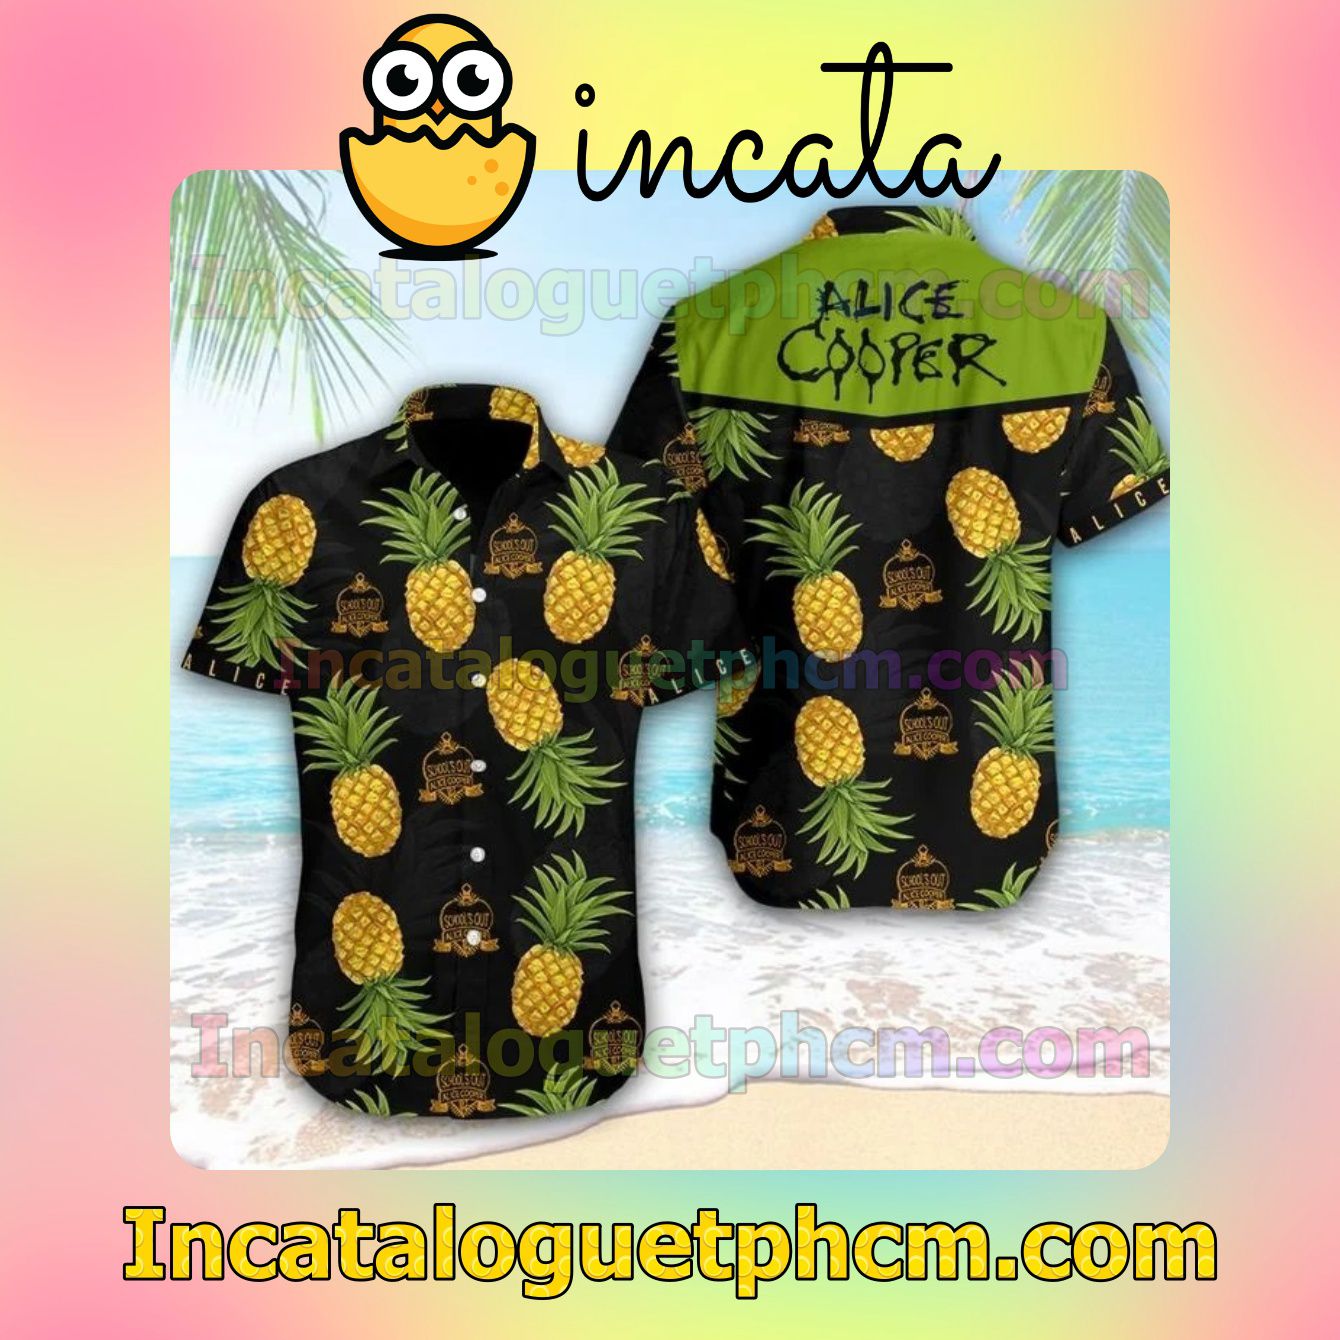 Alice Cooper Pineapple Black Men's Casual Shirts